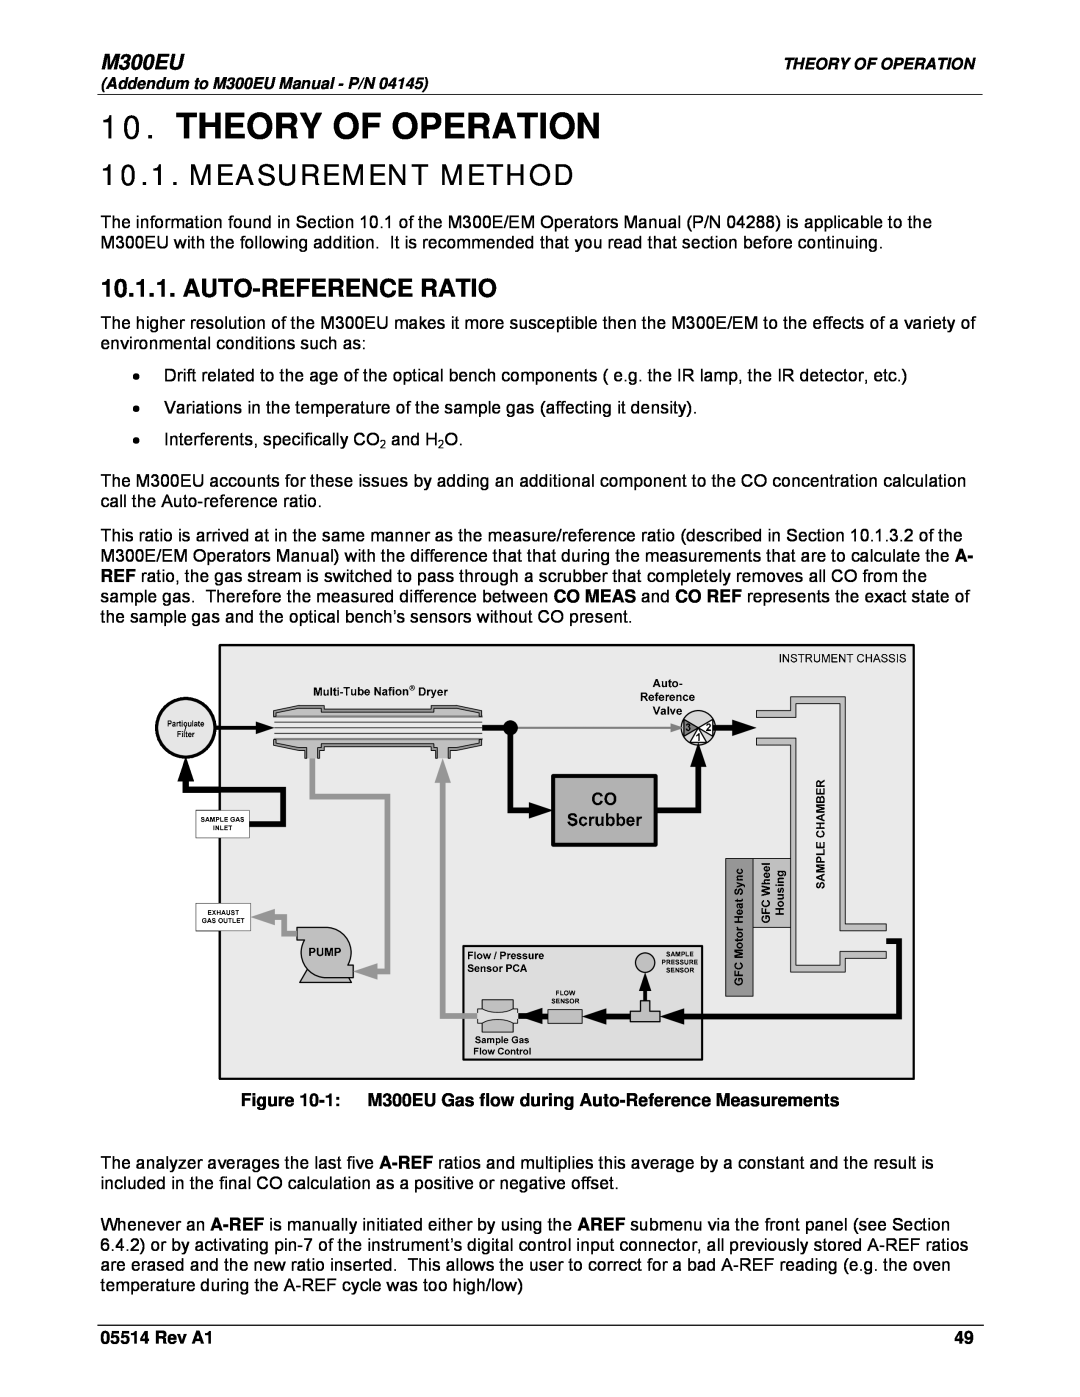 Teledyne Model 300EU manual Theory Of Operation, Measurement Method, Auto-Reference Ratio, M300EU, Rev A1 